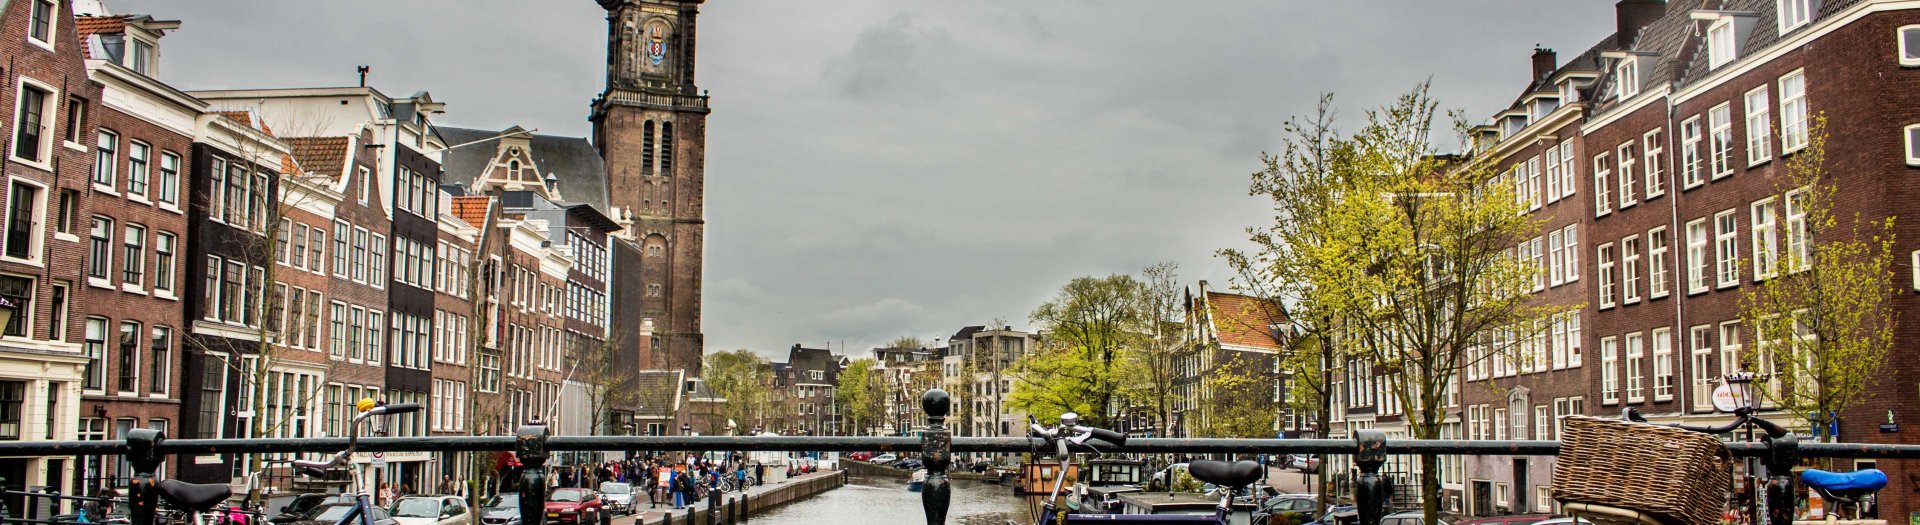 Wmo Amsterdam